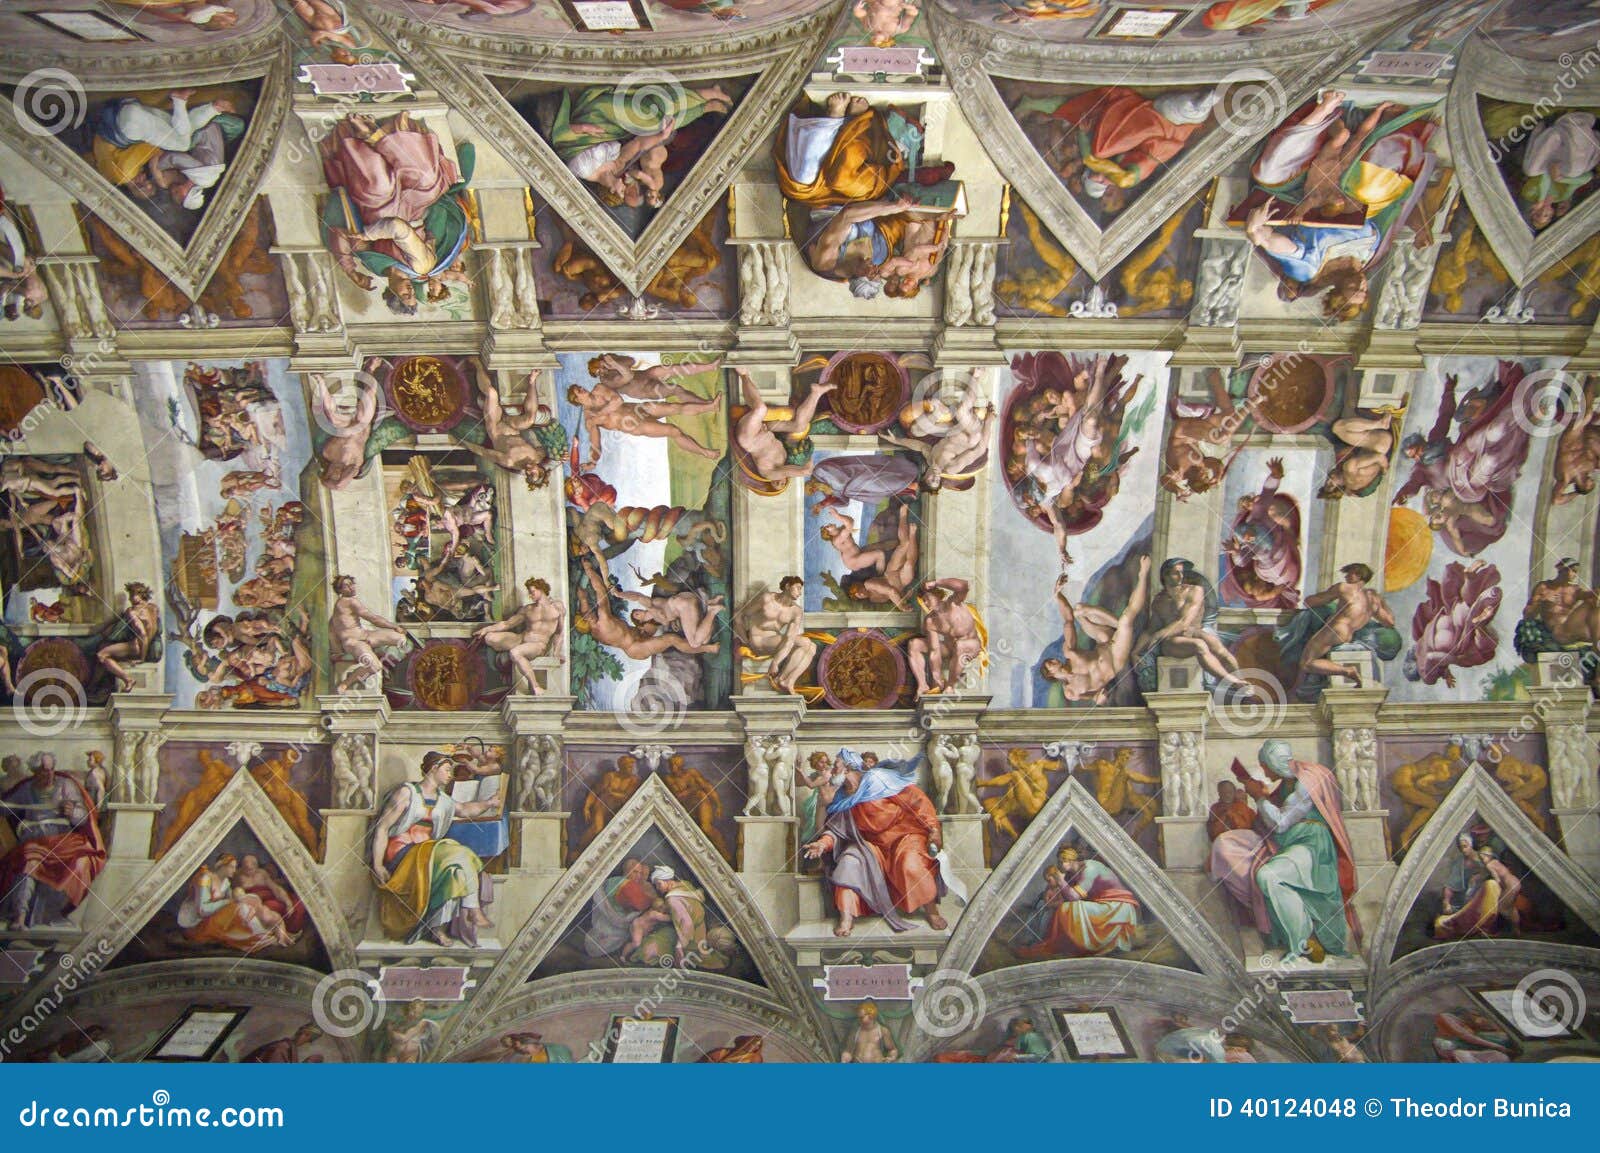 Sistine Chapel Ceiling Landmark Attraction In Vatican State